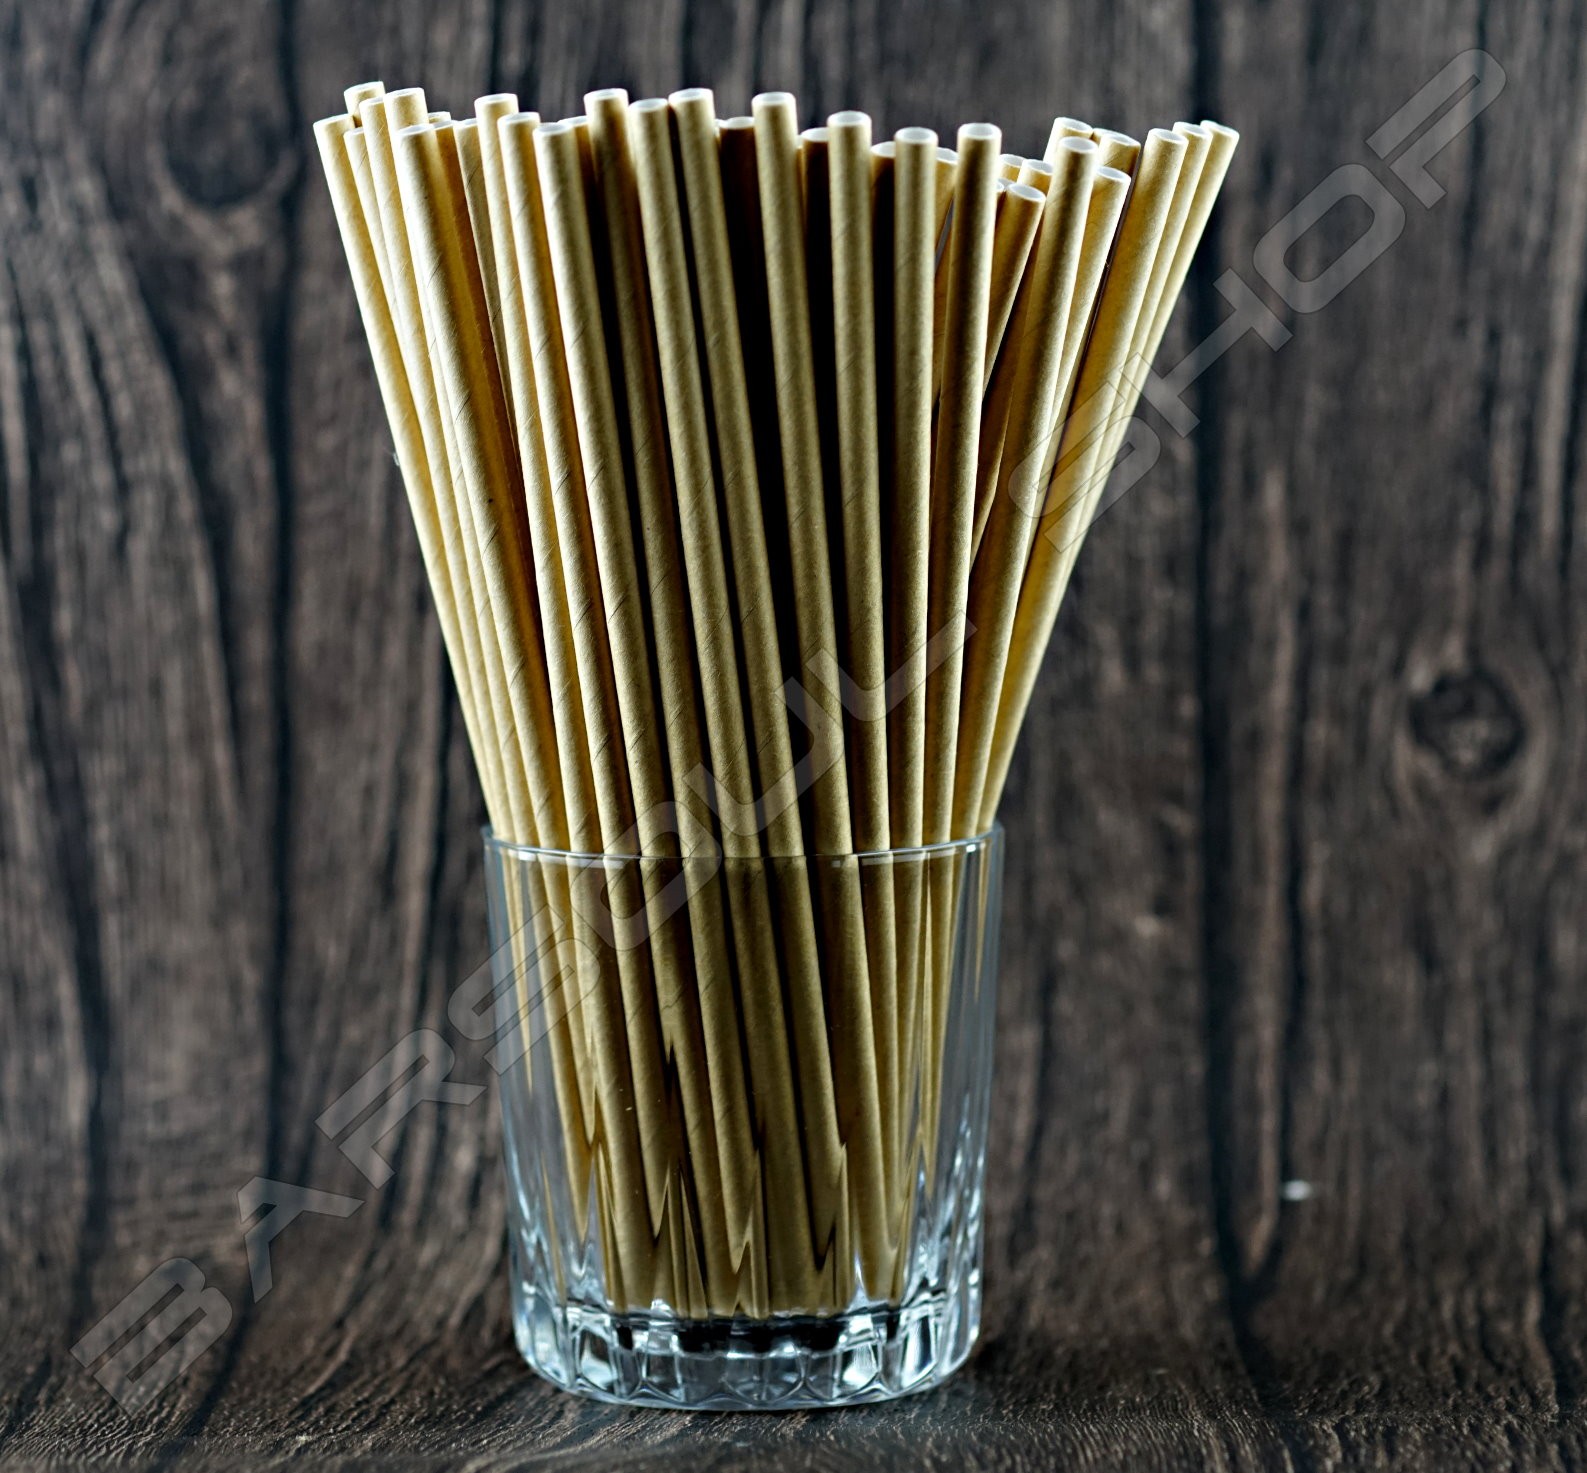 牛皮紙吸管B(200pcs) paper straw B